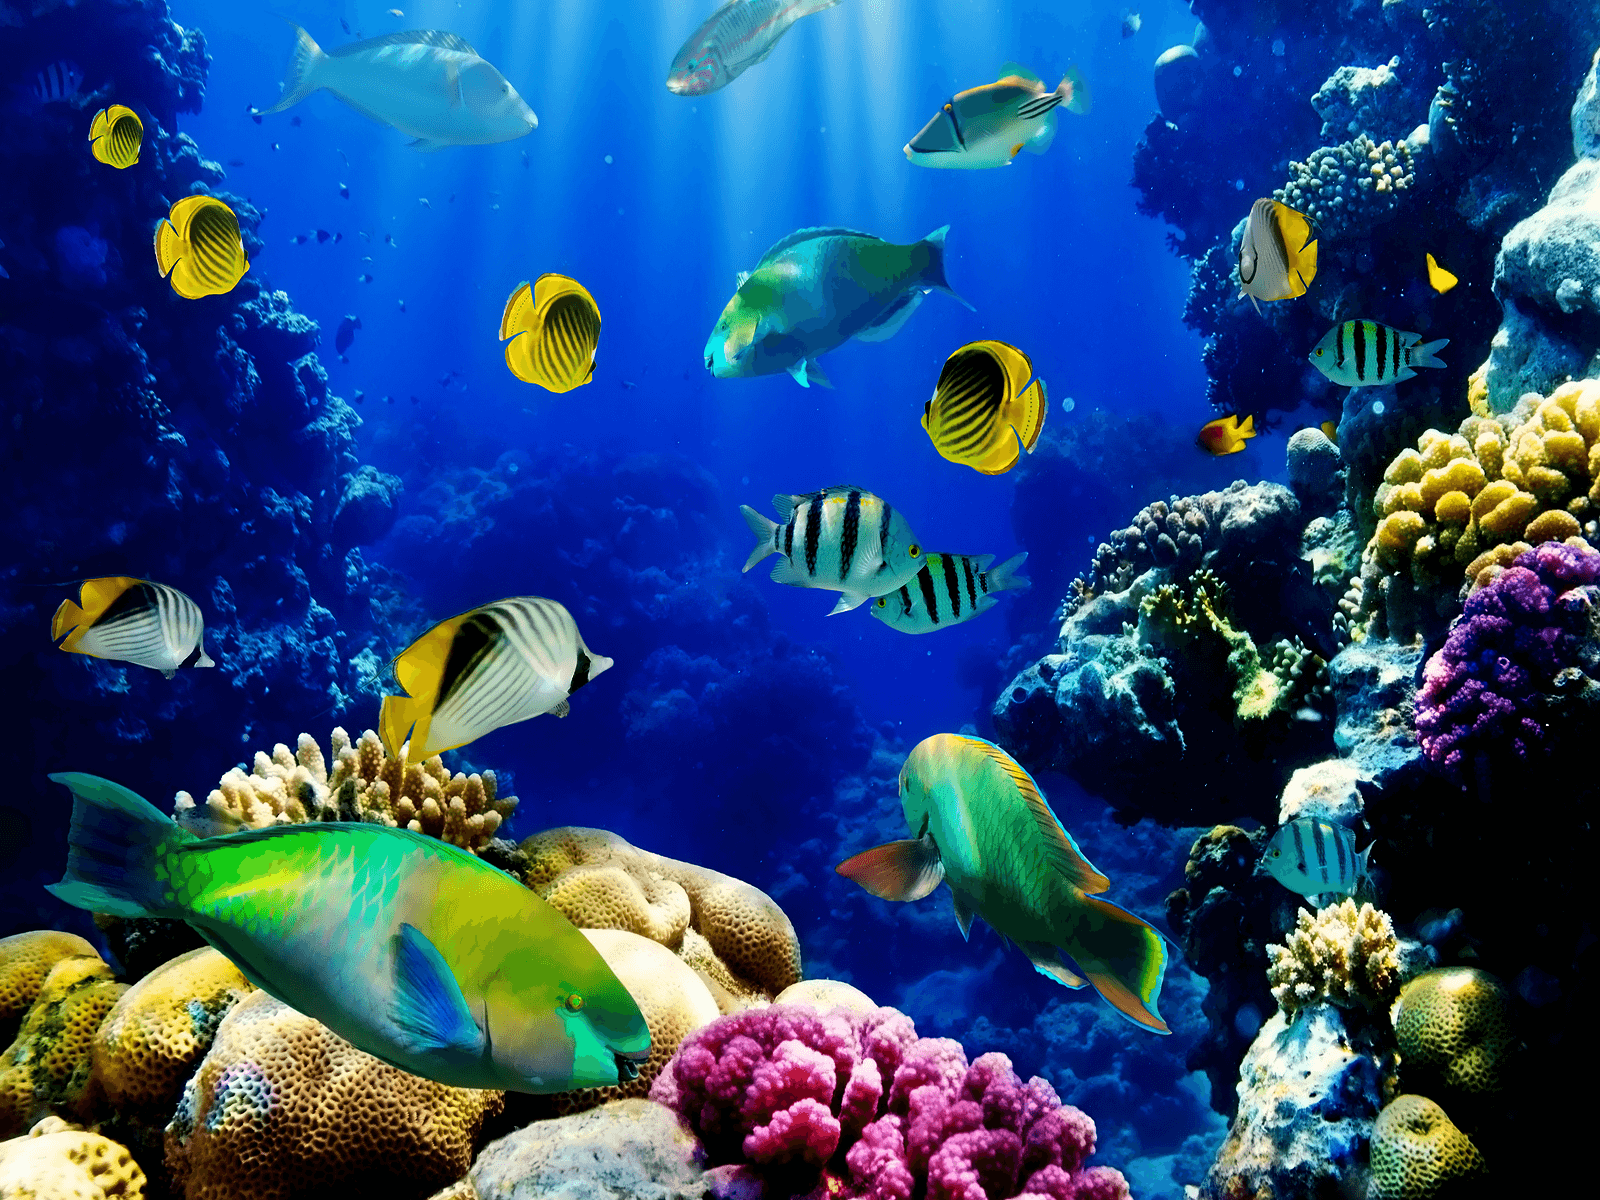 marine aquarium free screensaver